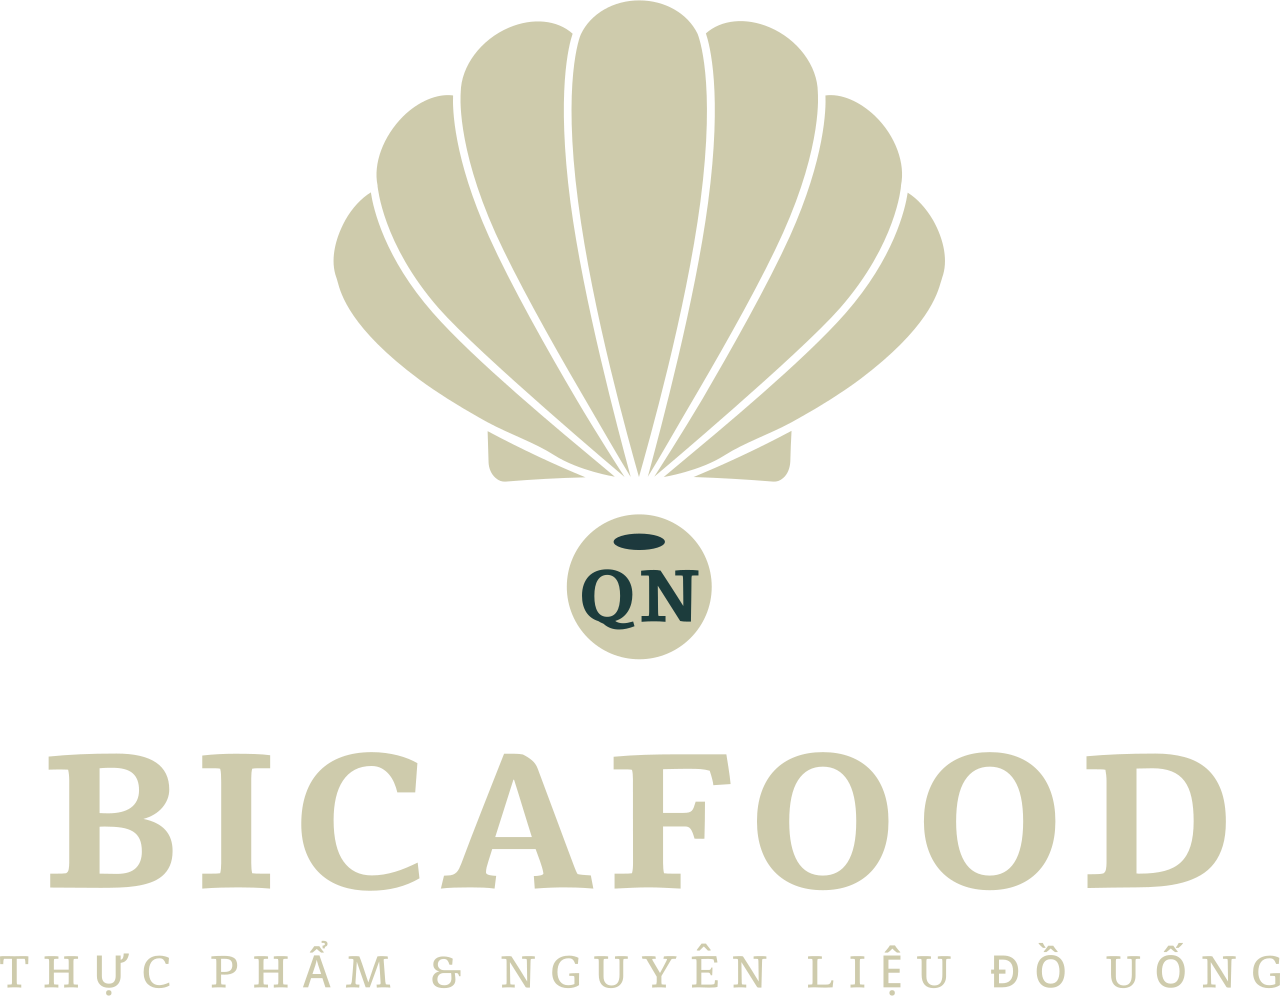 BICAFOOD's web page